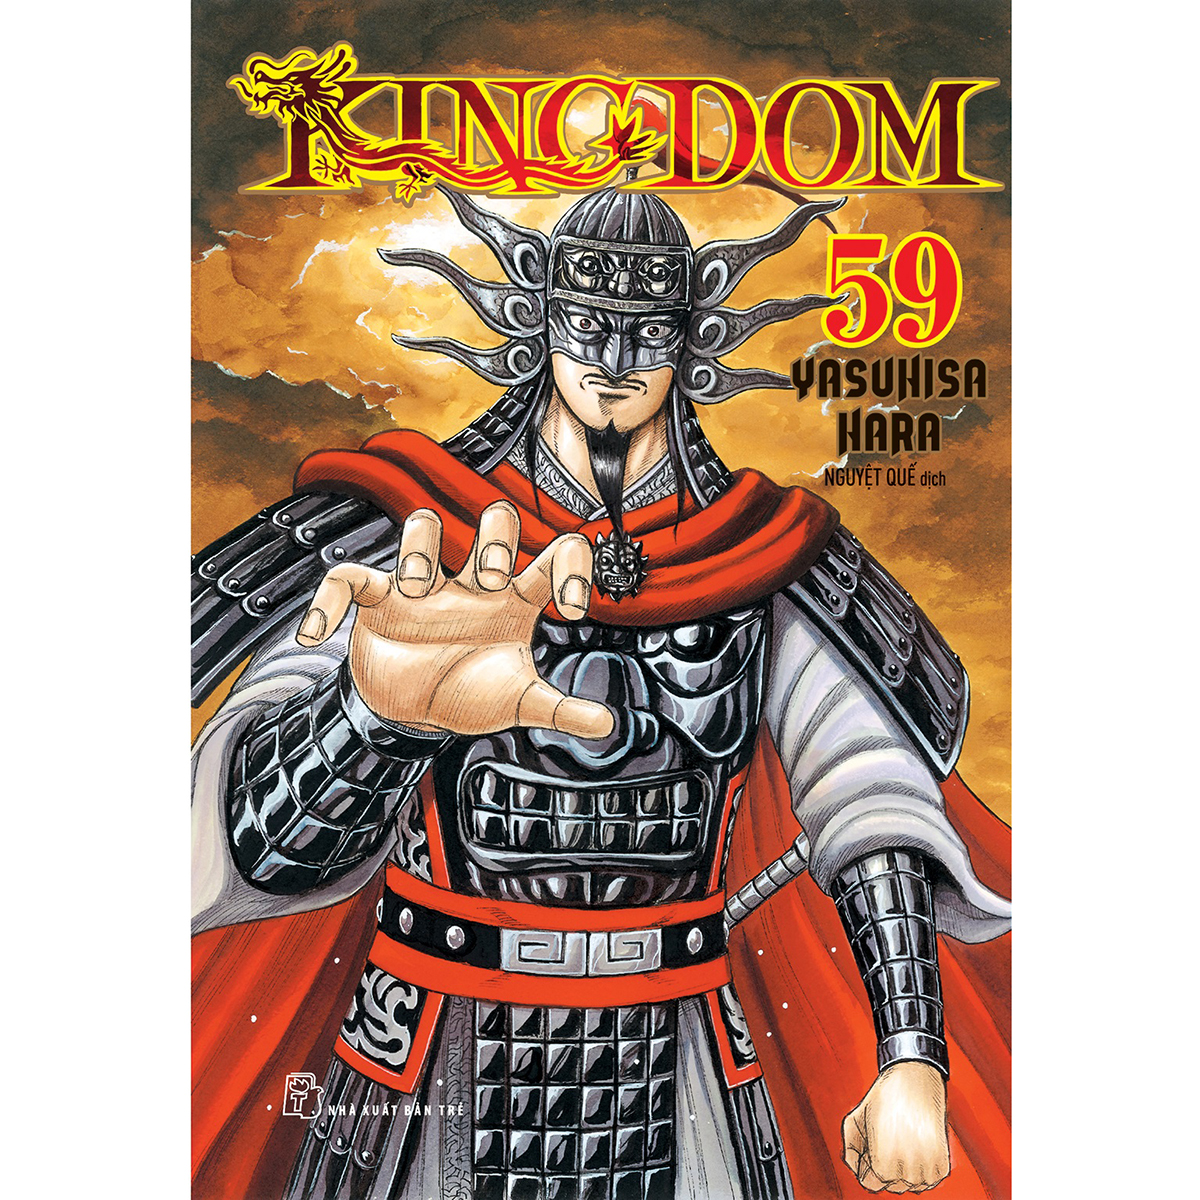 Kingdom 59